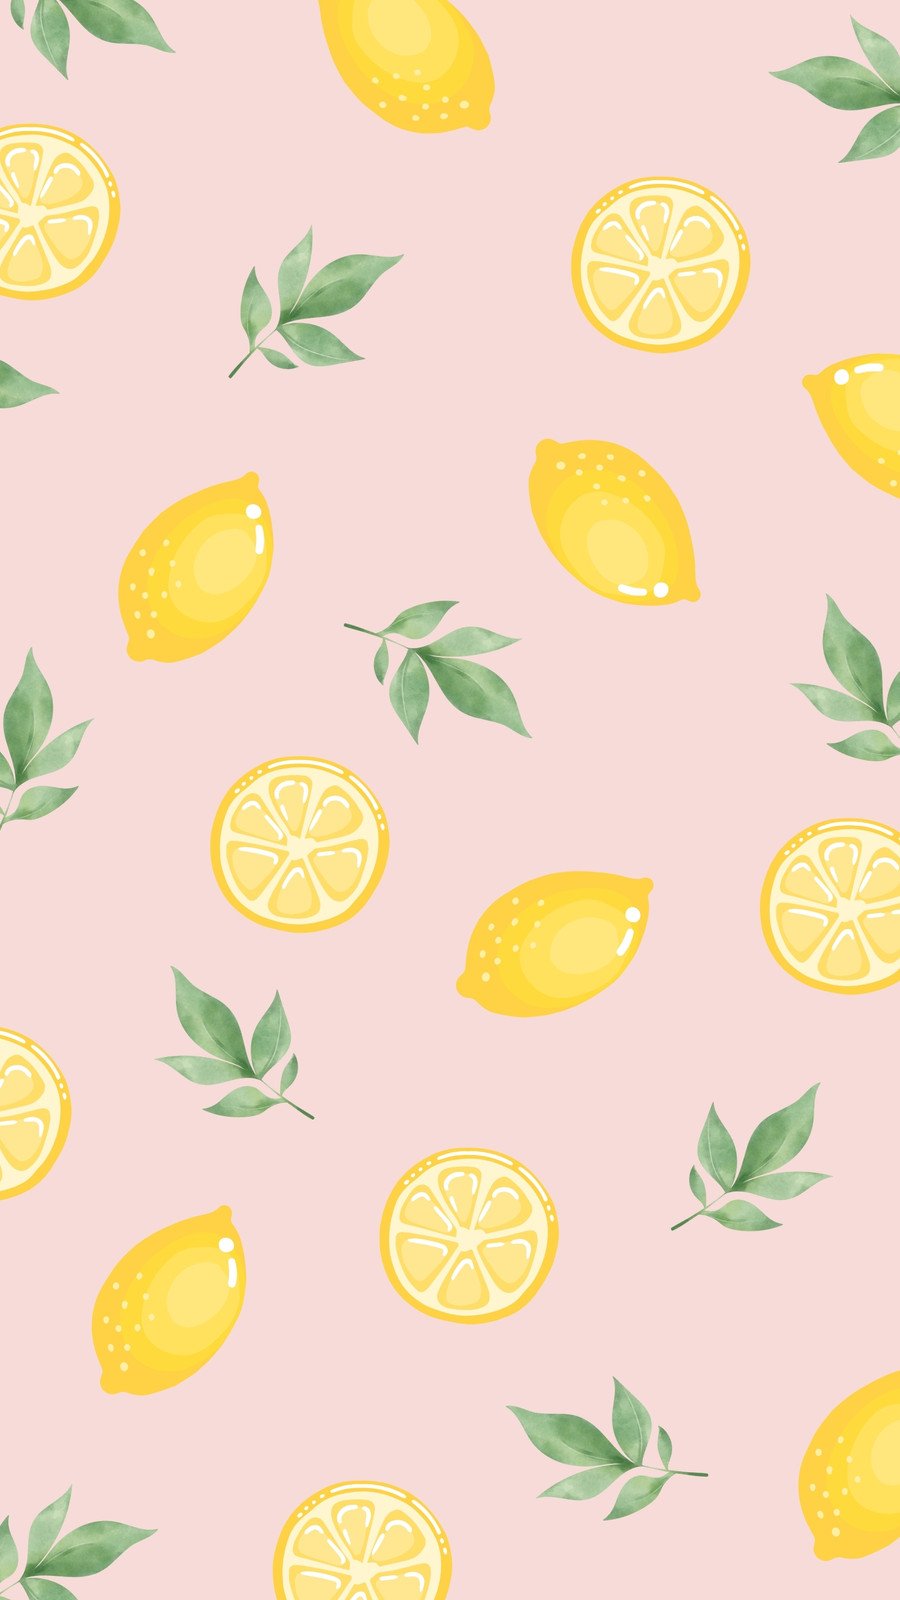 Premium Vector  Seamless vector pattern with cute kawaii lemons